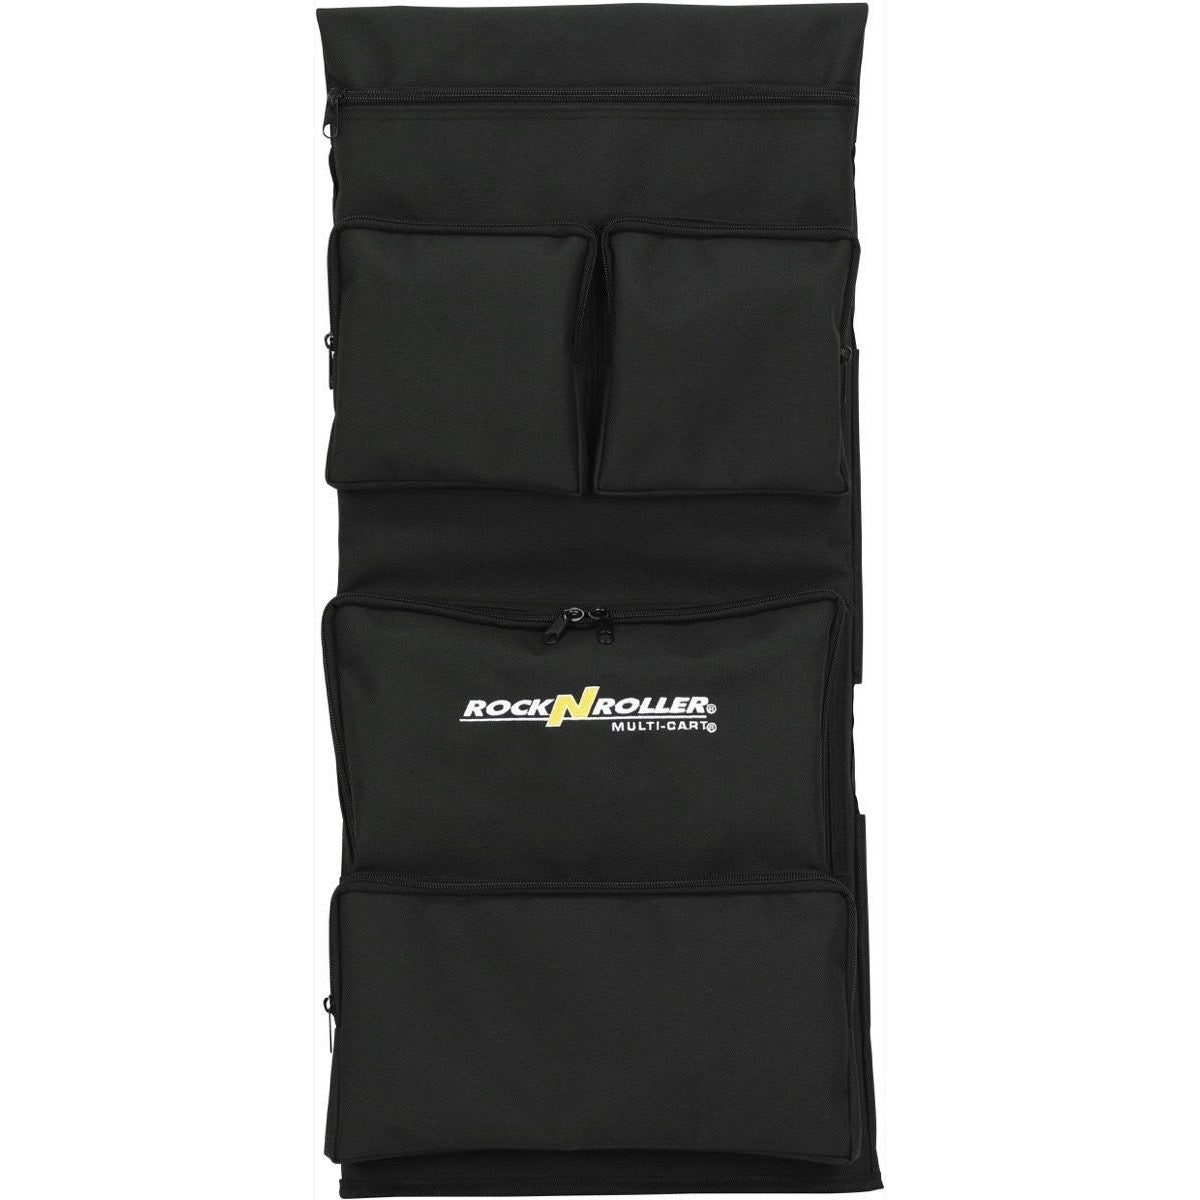 RocknRoller Tool/Accessory Bag, RSA-TAB14, Large